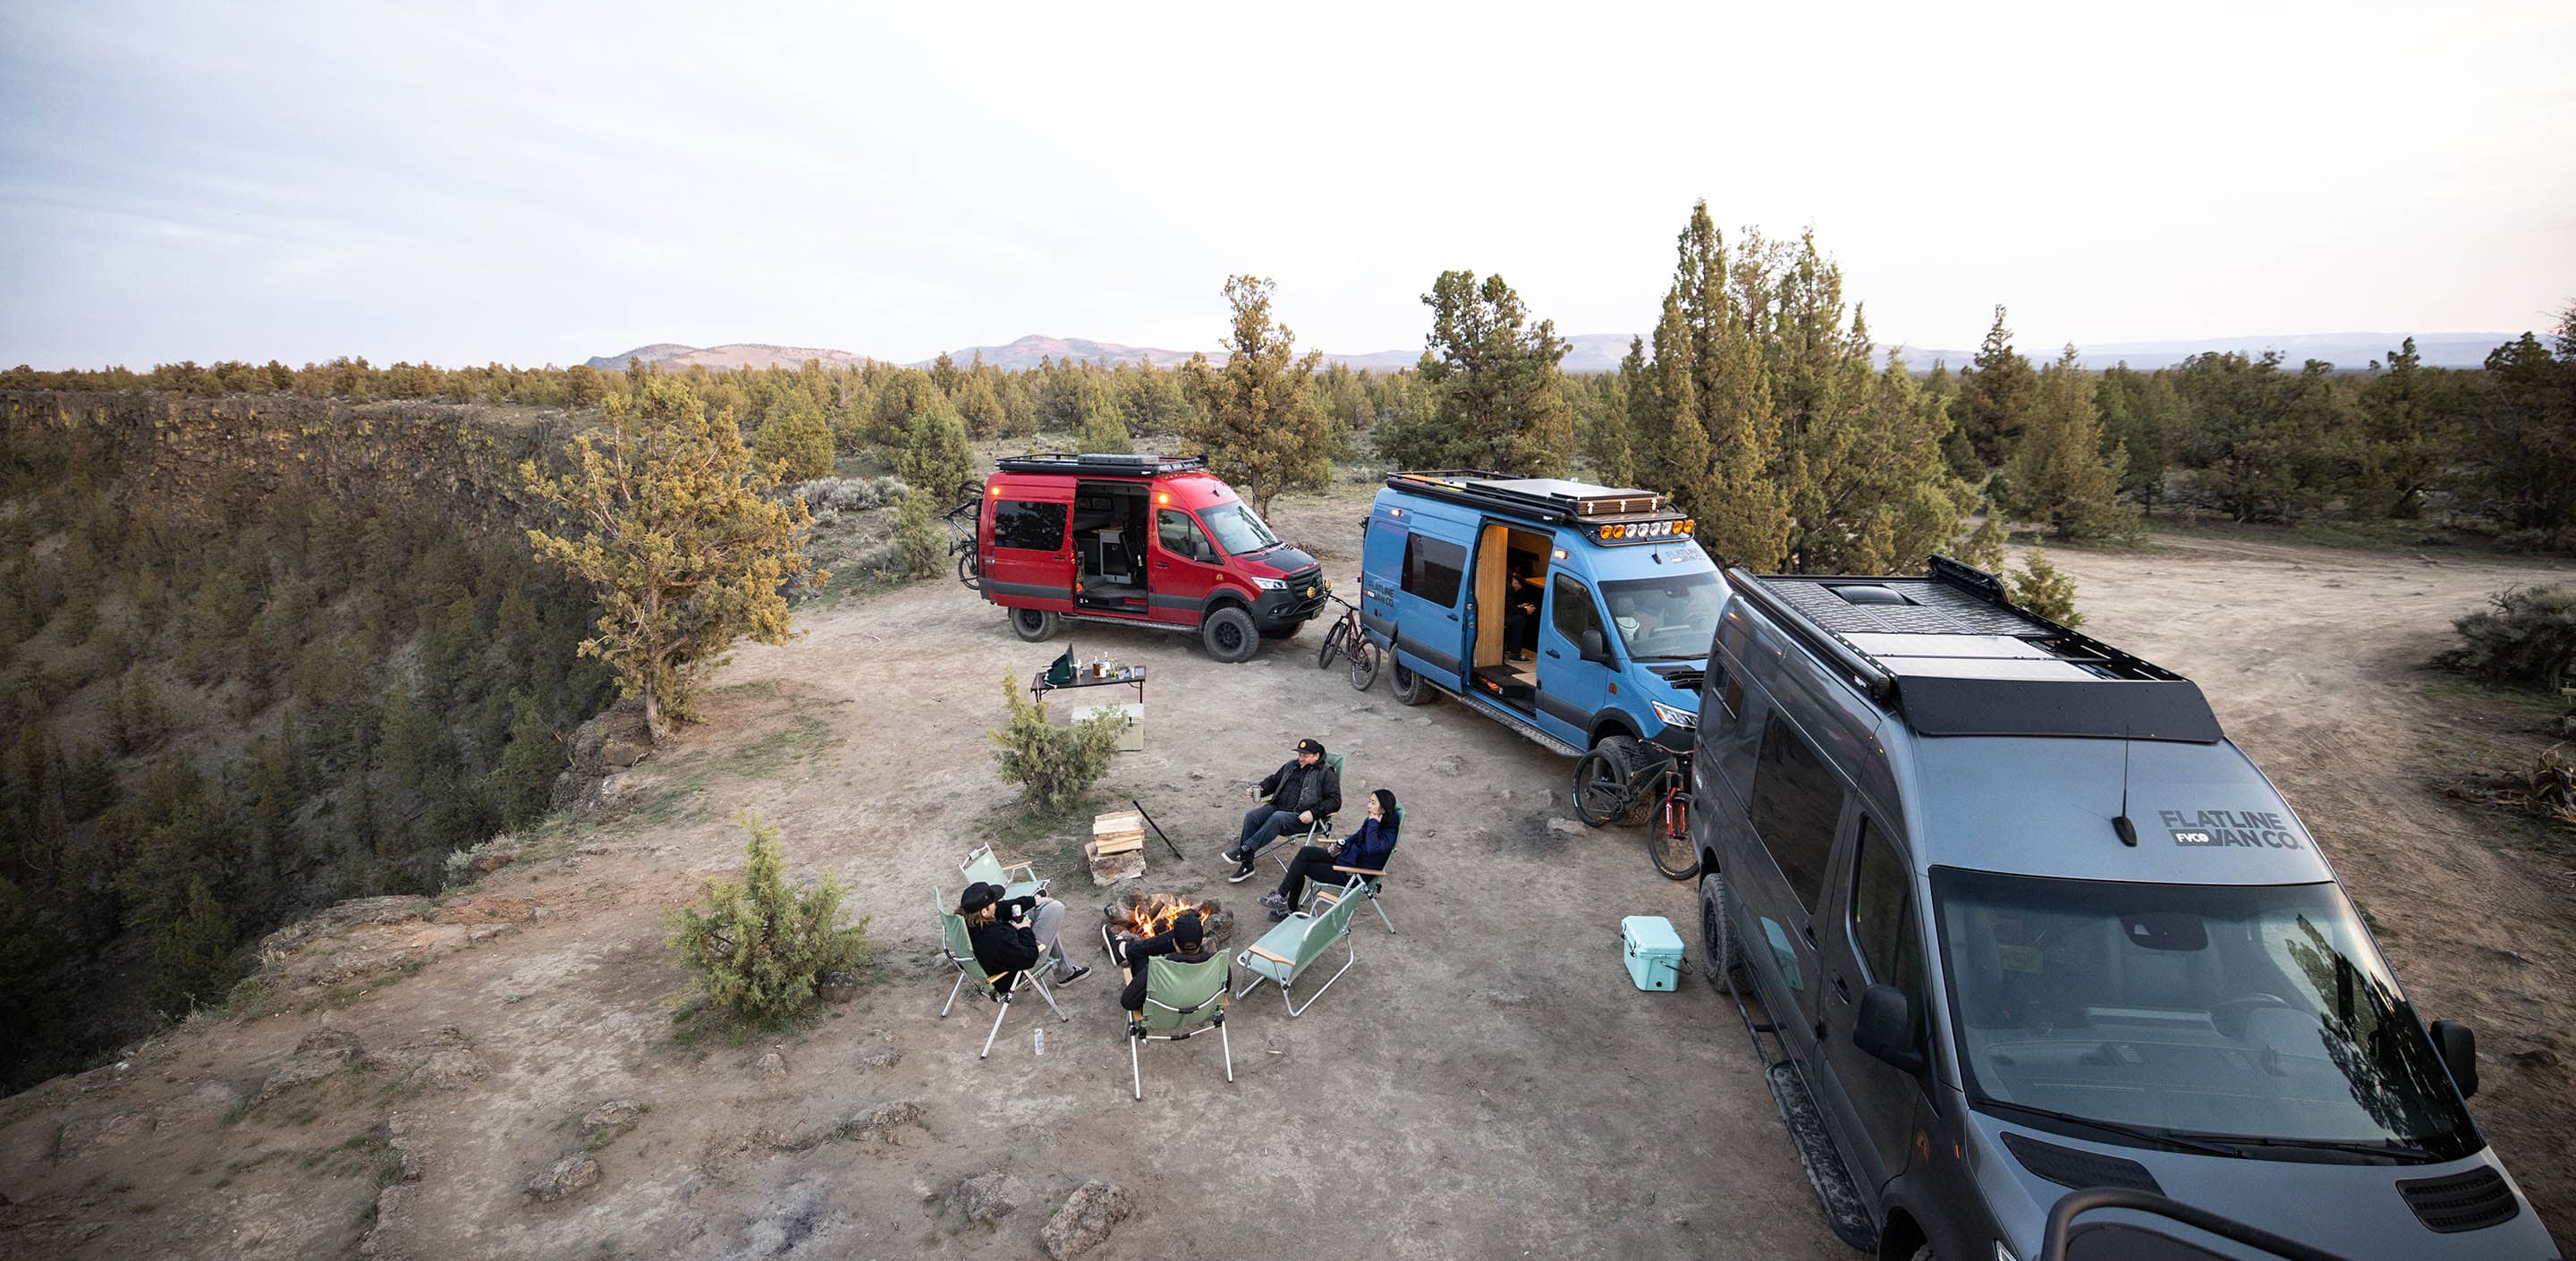 Sprinter Vans Camping on BLM Land